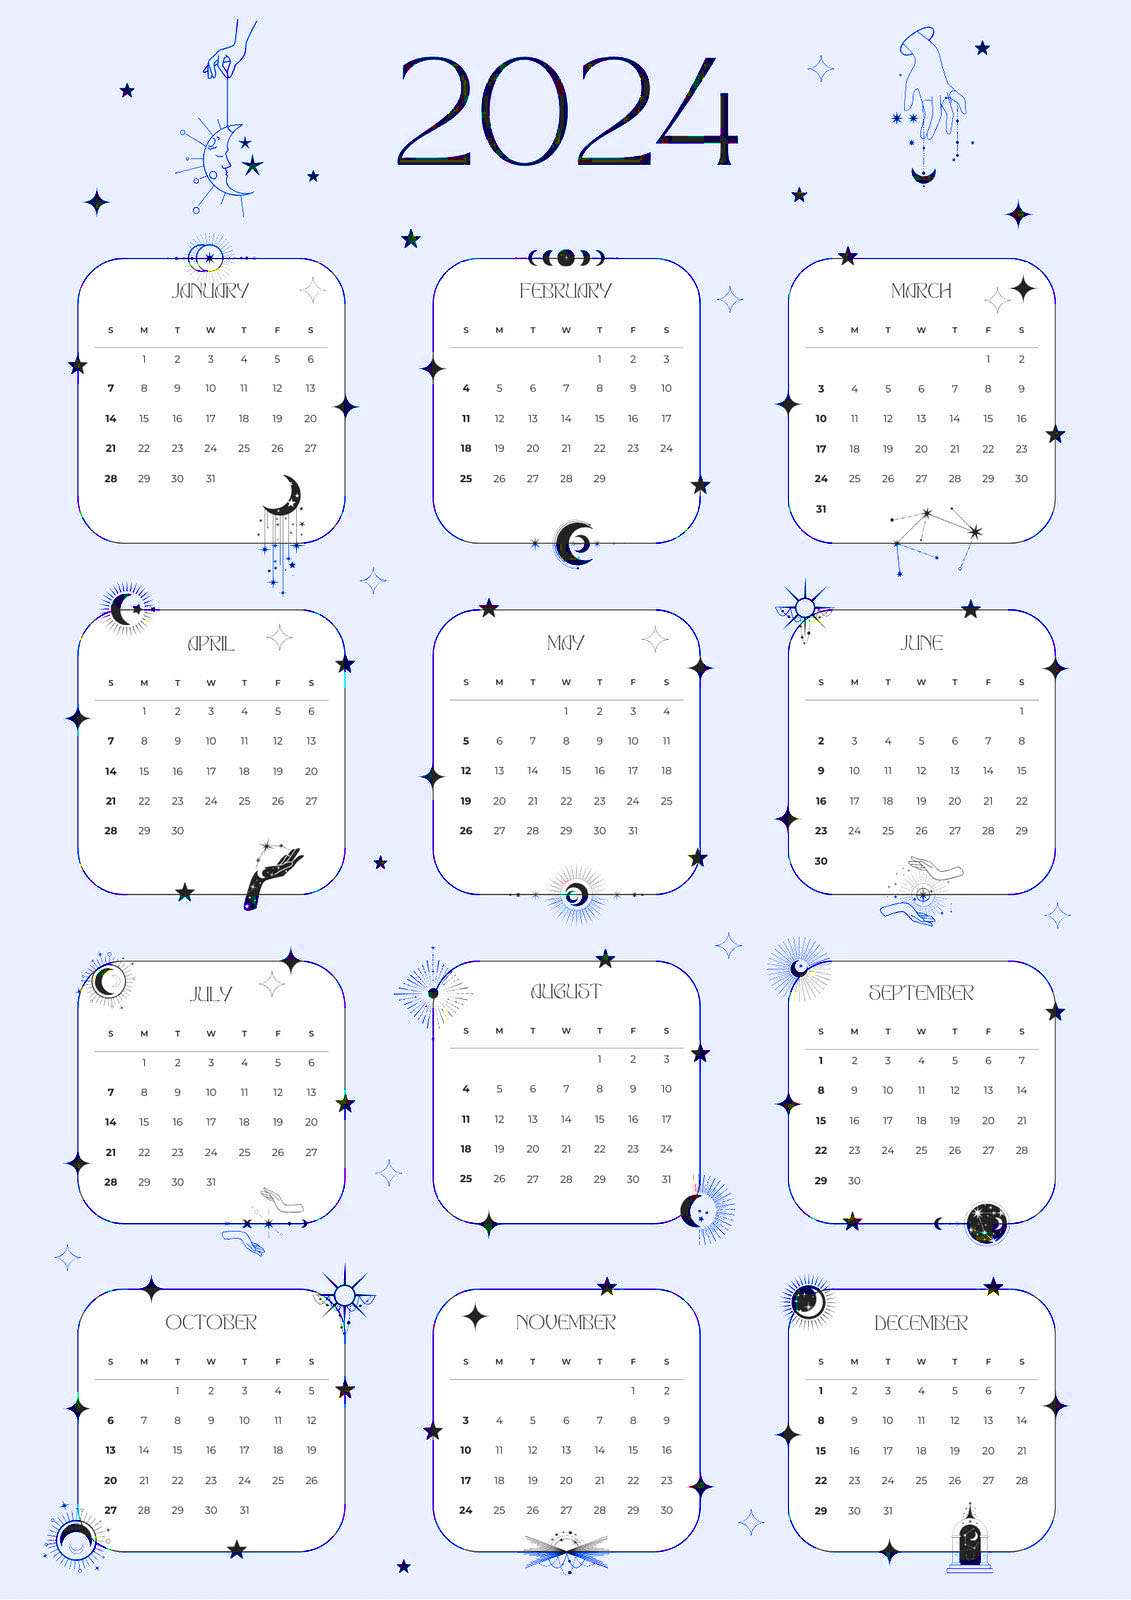 2024 Calendar Planned Year